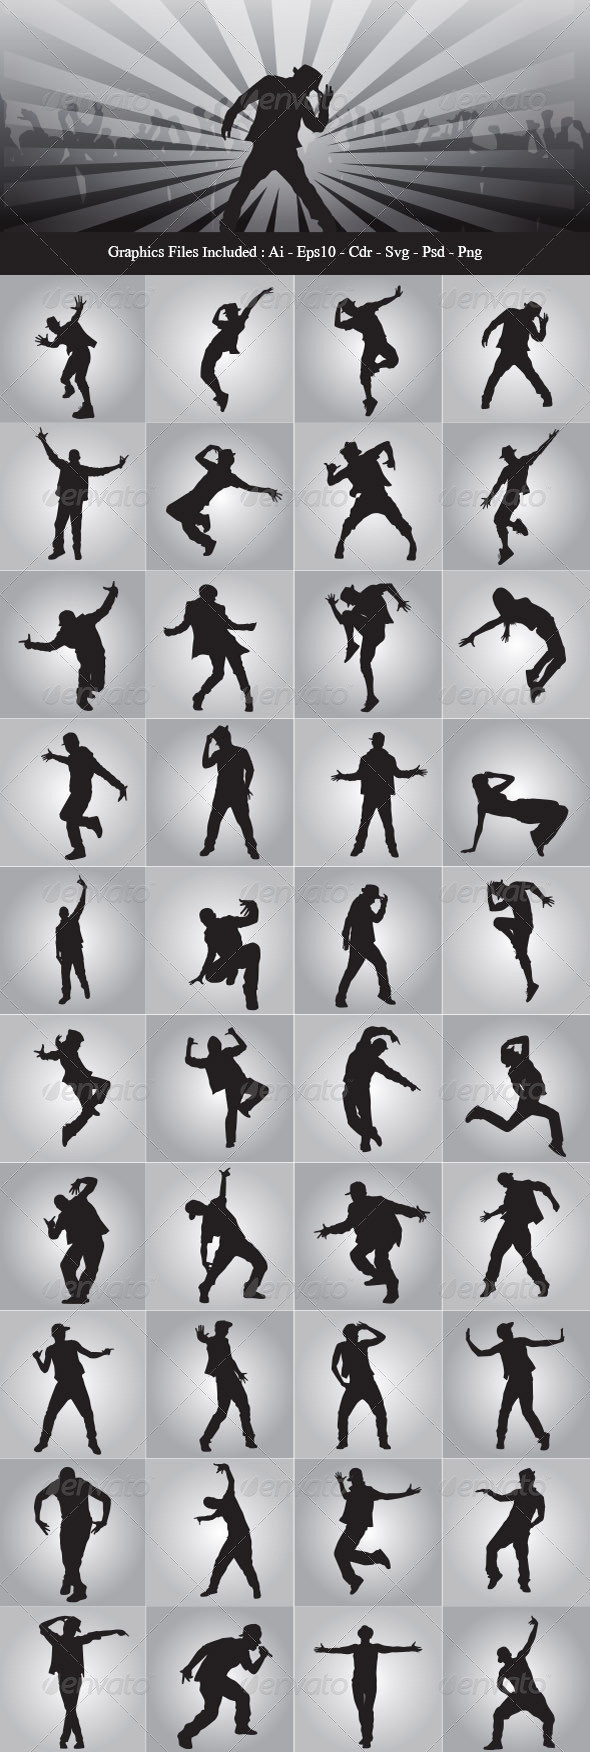 07 hip hop dancer silhouettes preview